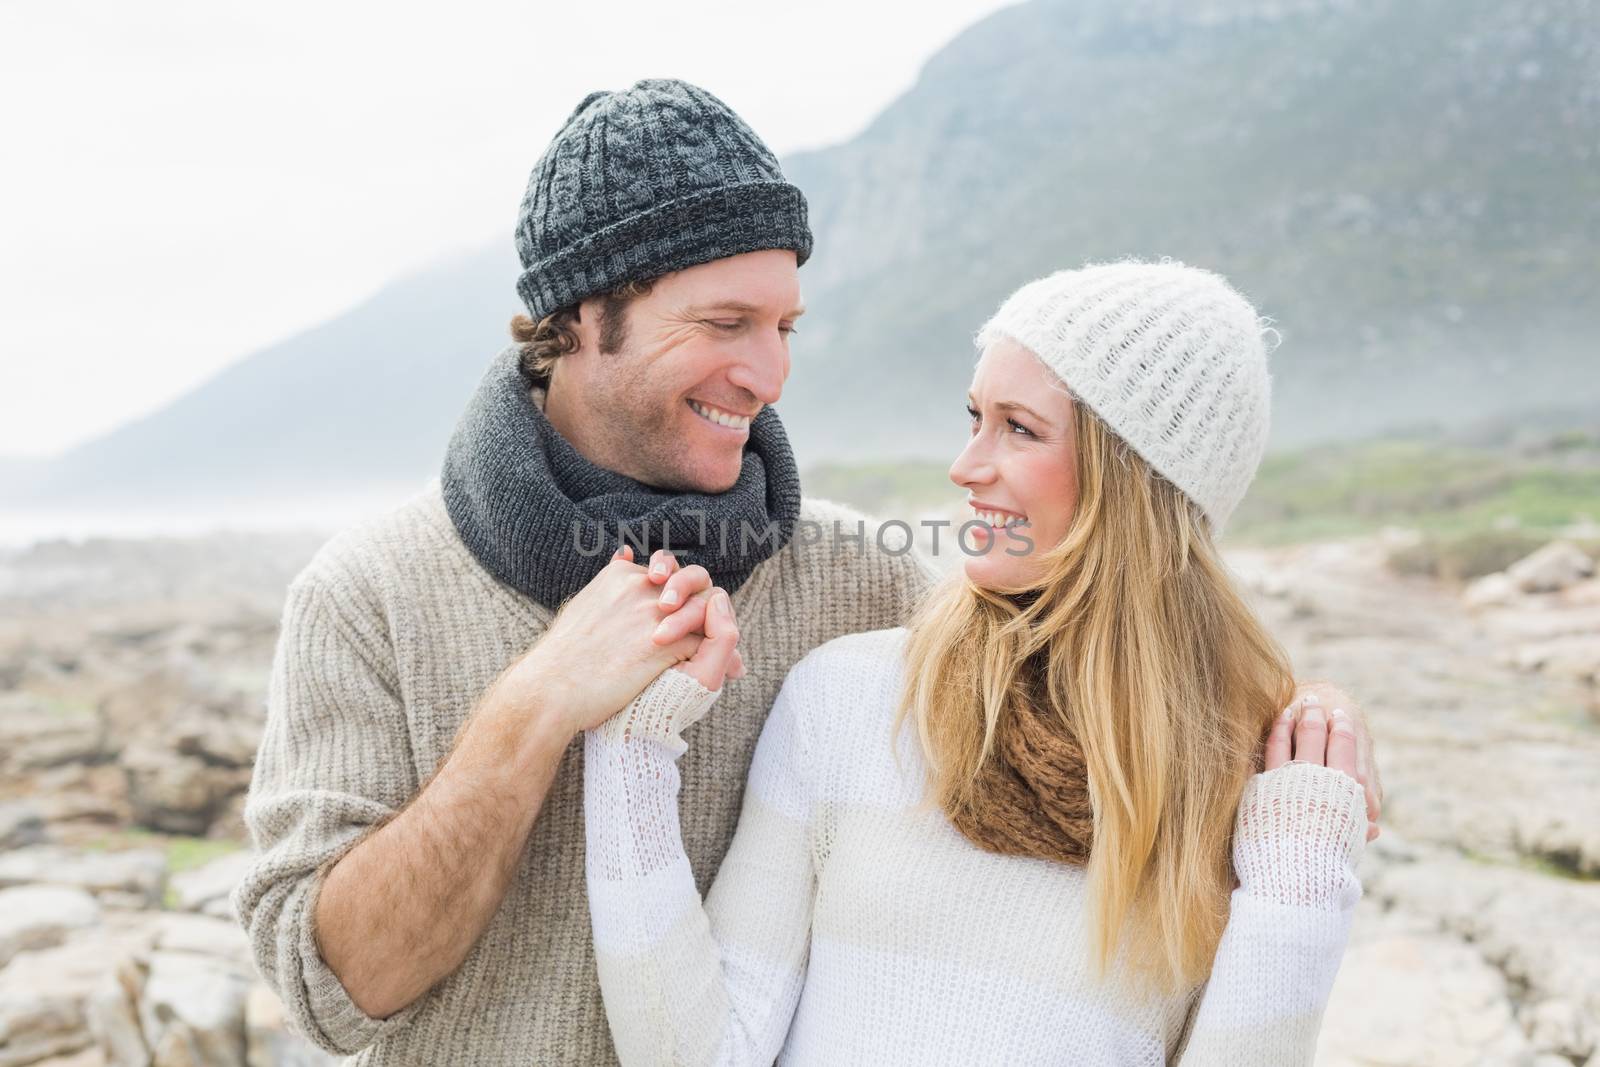 Romantic couple together on rocky landscape by Wavebreakmedia